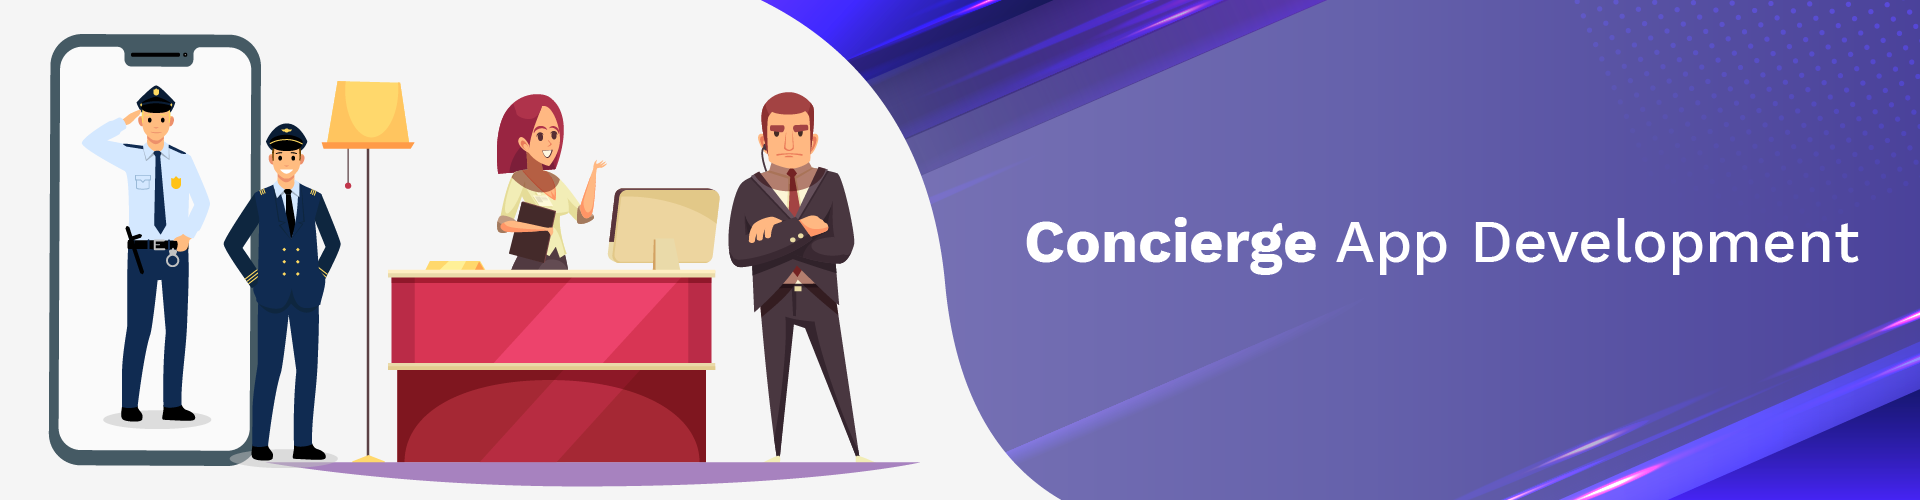 concierge app development